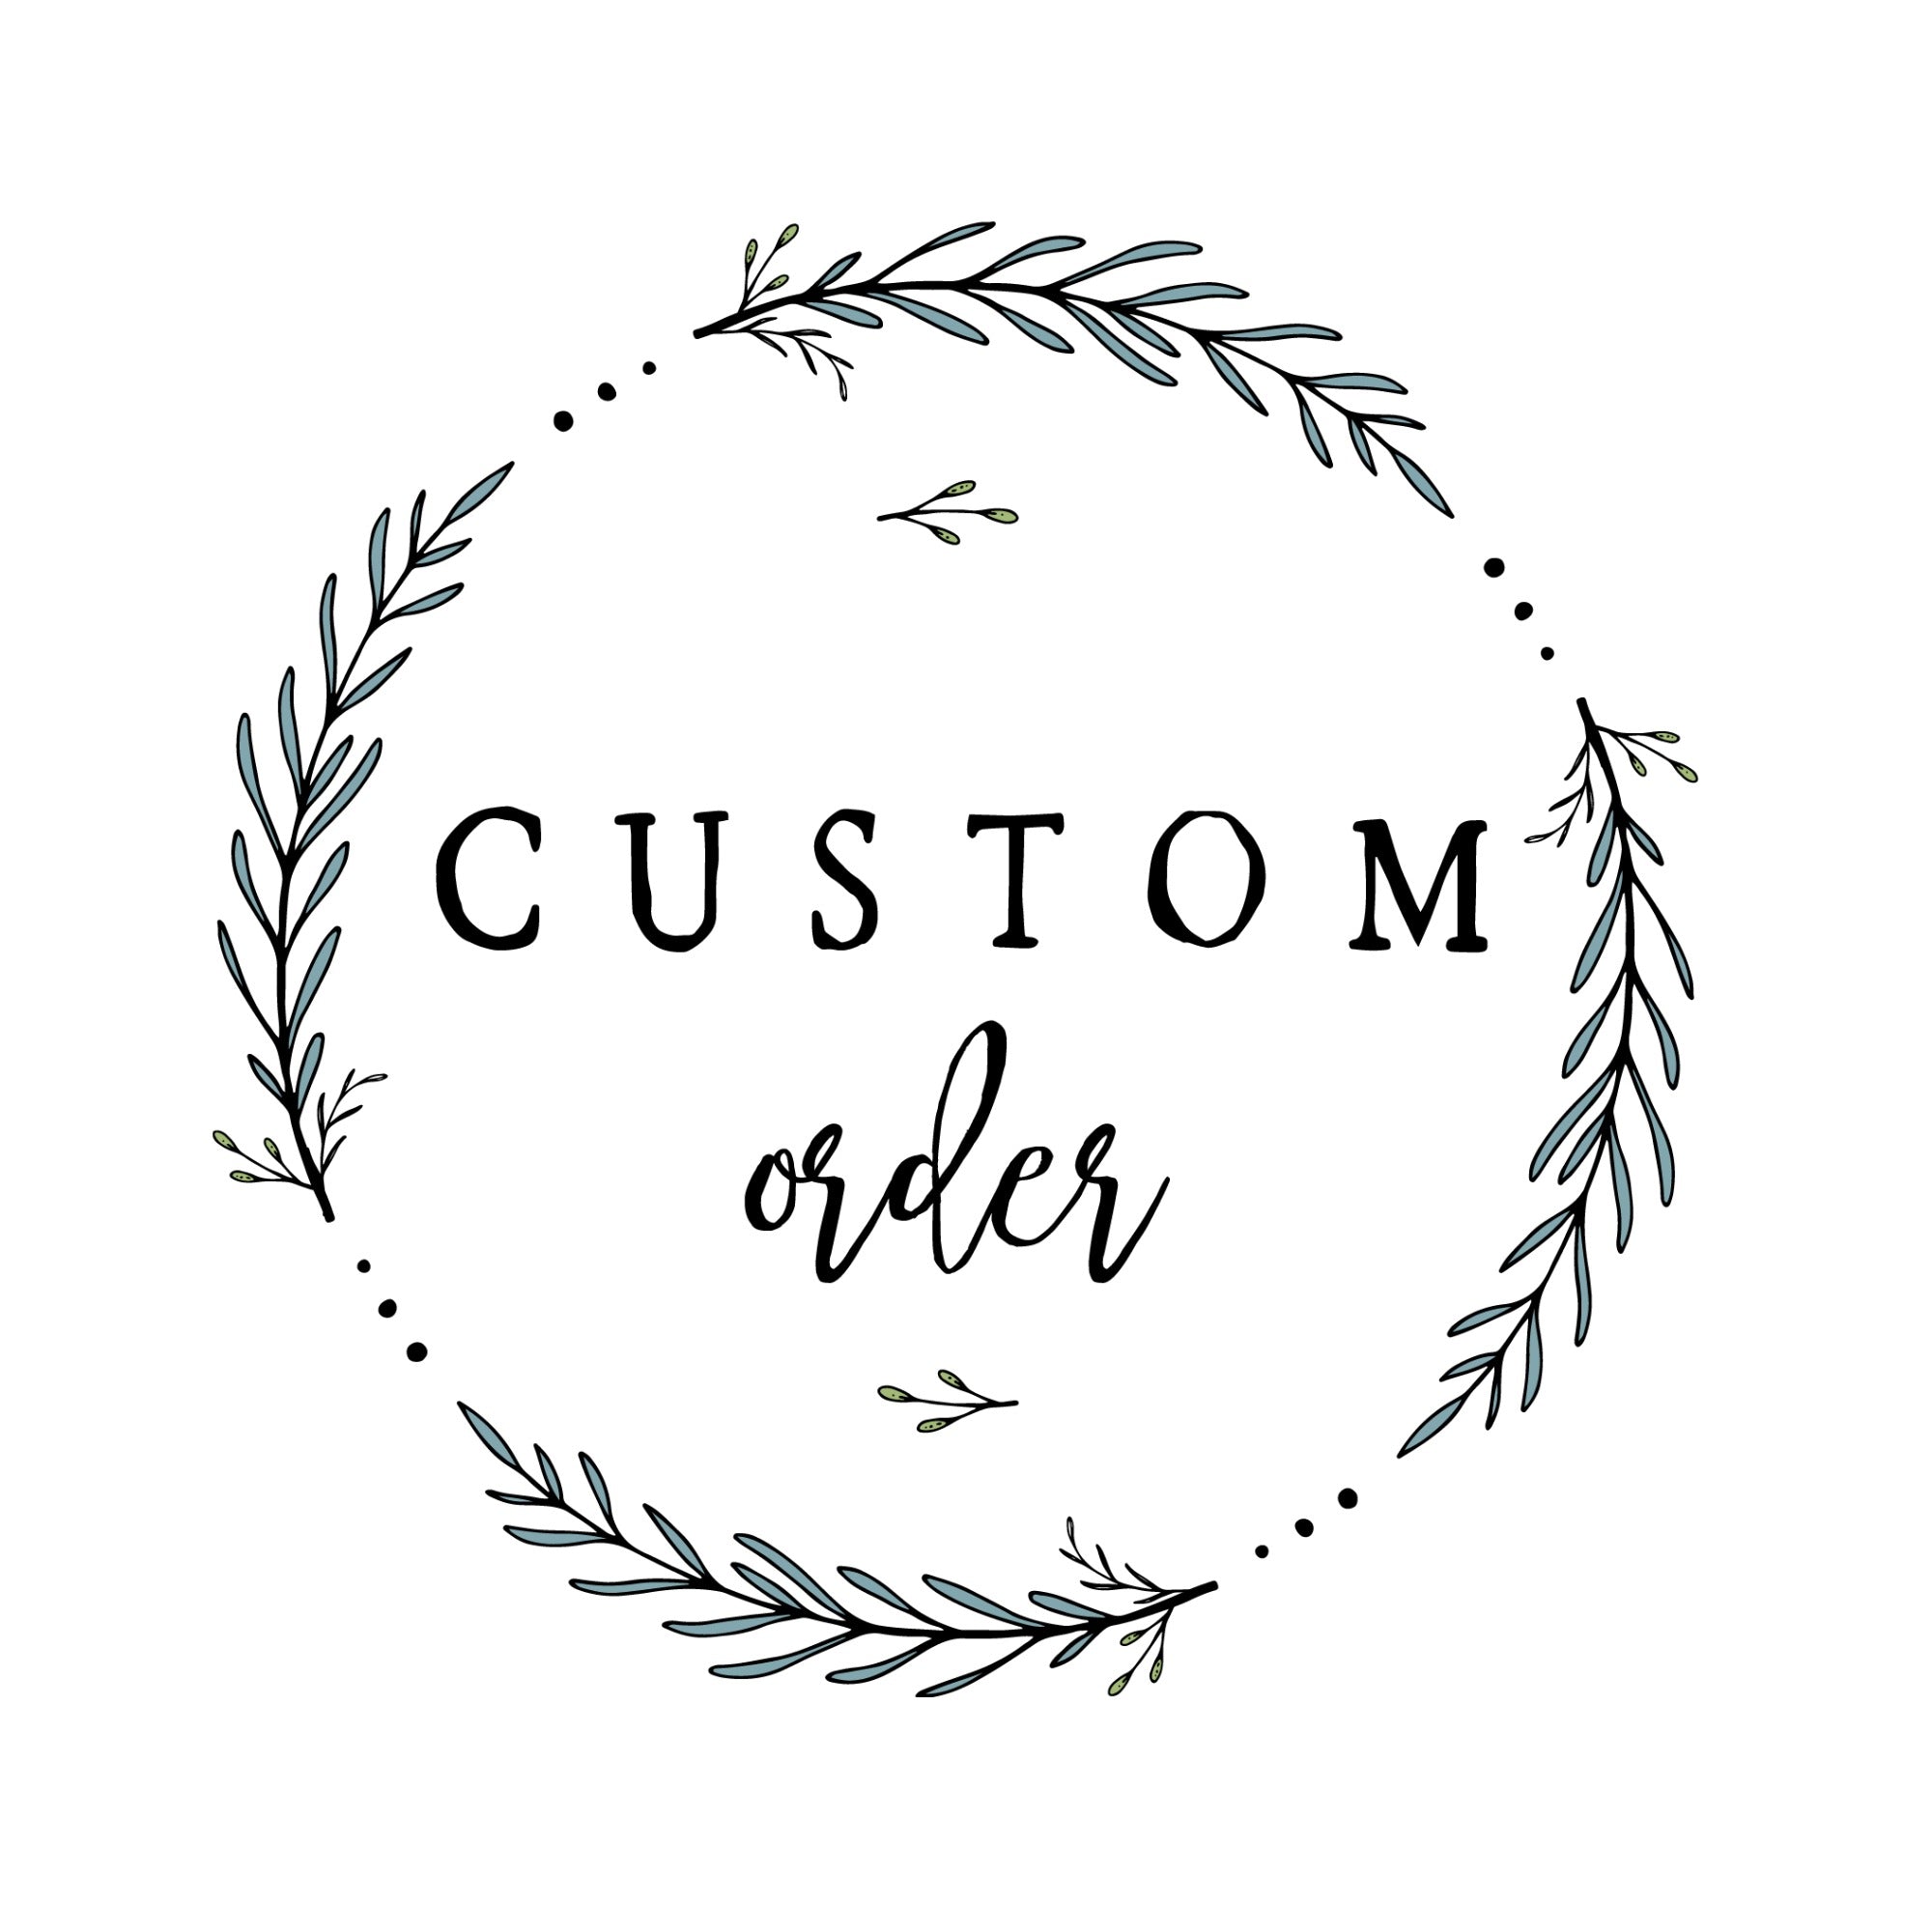 Custom Order for Michael W. - Robert L- 2-8-21